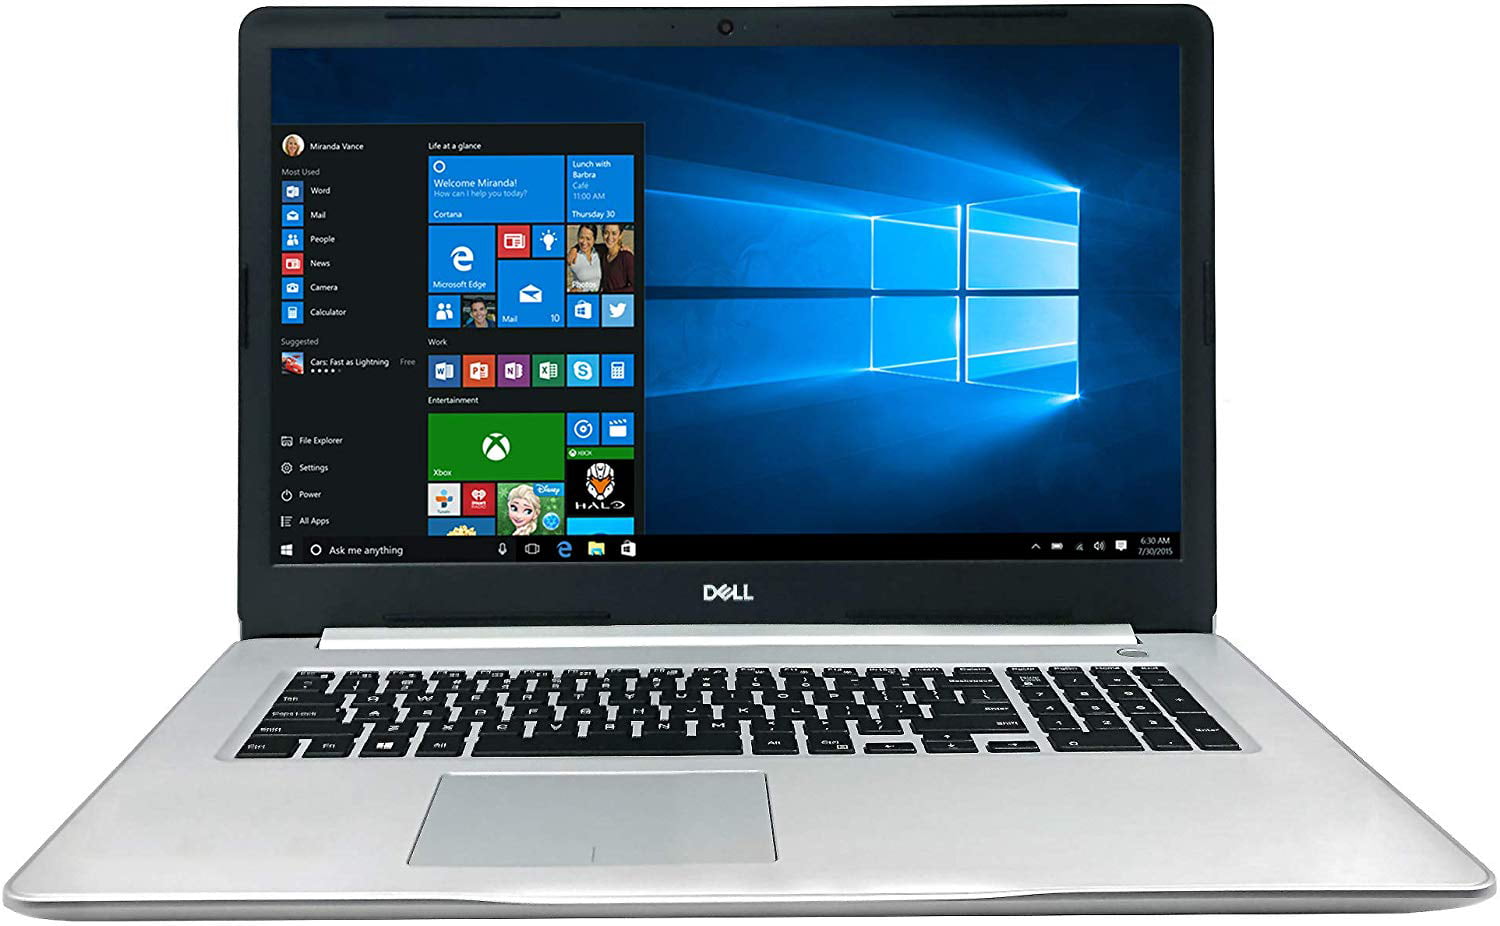 Dell Inspiron 17 5000 Series 5770 17.3" Full HD Laptop - 8th Gen Intel